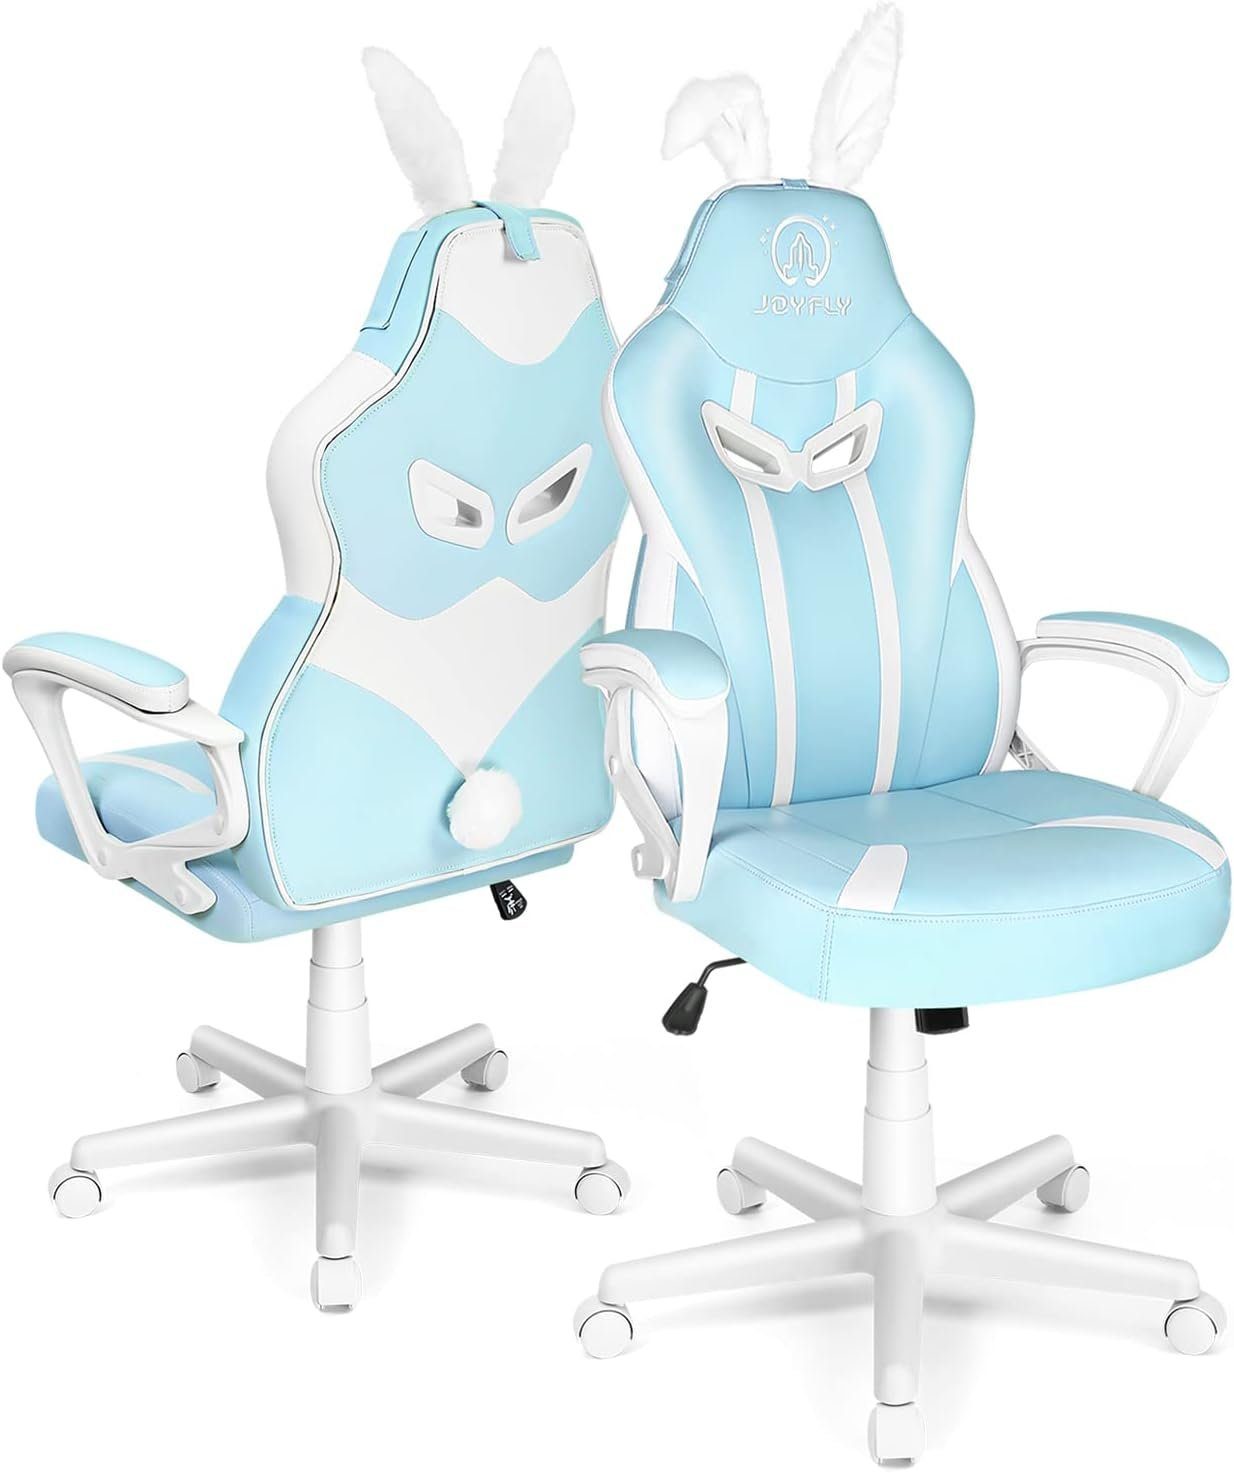 Lendenwirbelstütze Stuhl Gaming-Stuhl Lendenwirbelstütze), (Gamer-Stuhl: Kawaii Chair JOYFLY mit Hello-Kitty mit Gaming Ergonomischer Gaming Computerstuhl